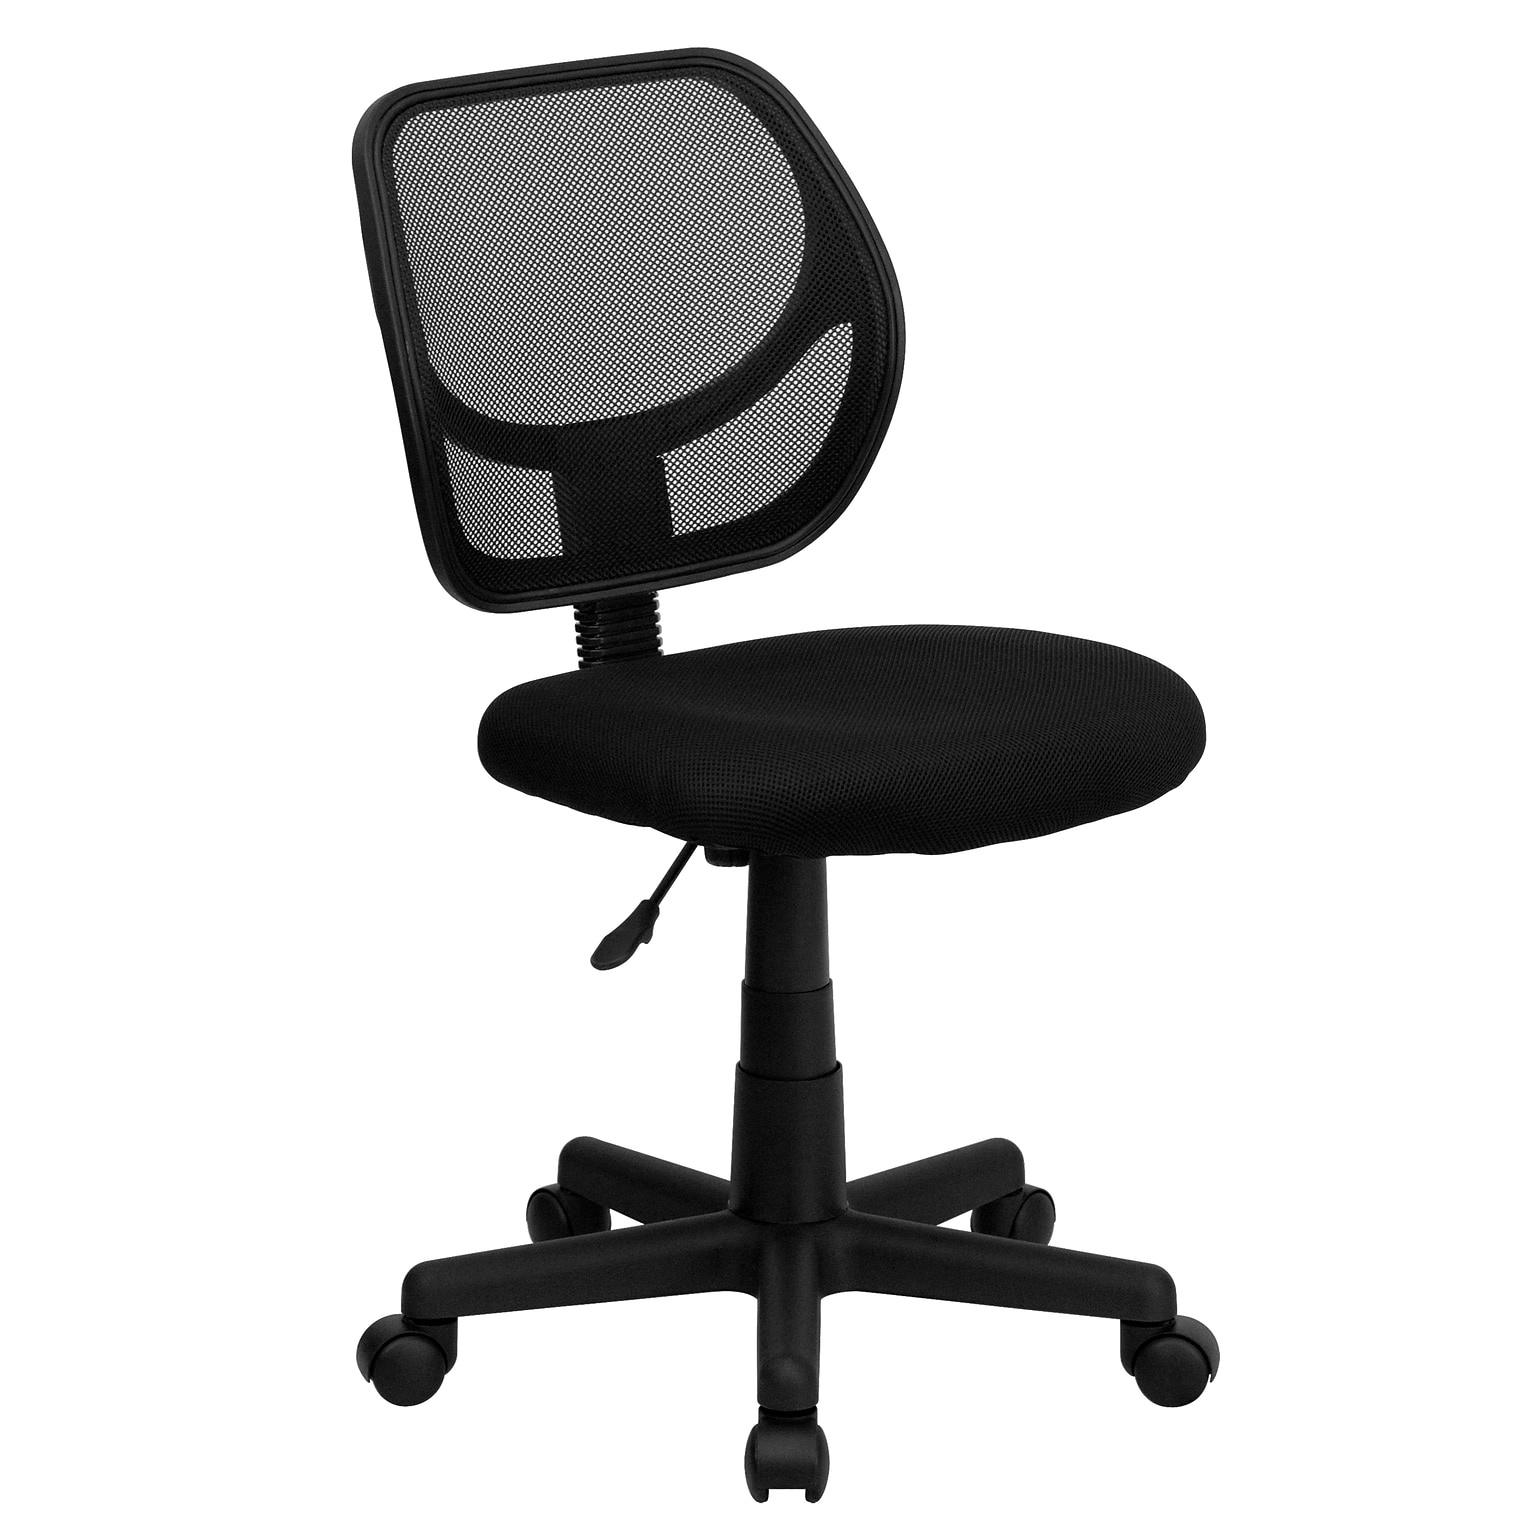 Flash Furniture Neri Armless Ergonomic Mesh Swivel Low Back Task Office Chair, Black (WA3074BK)